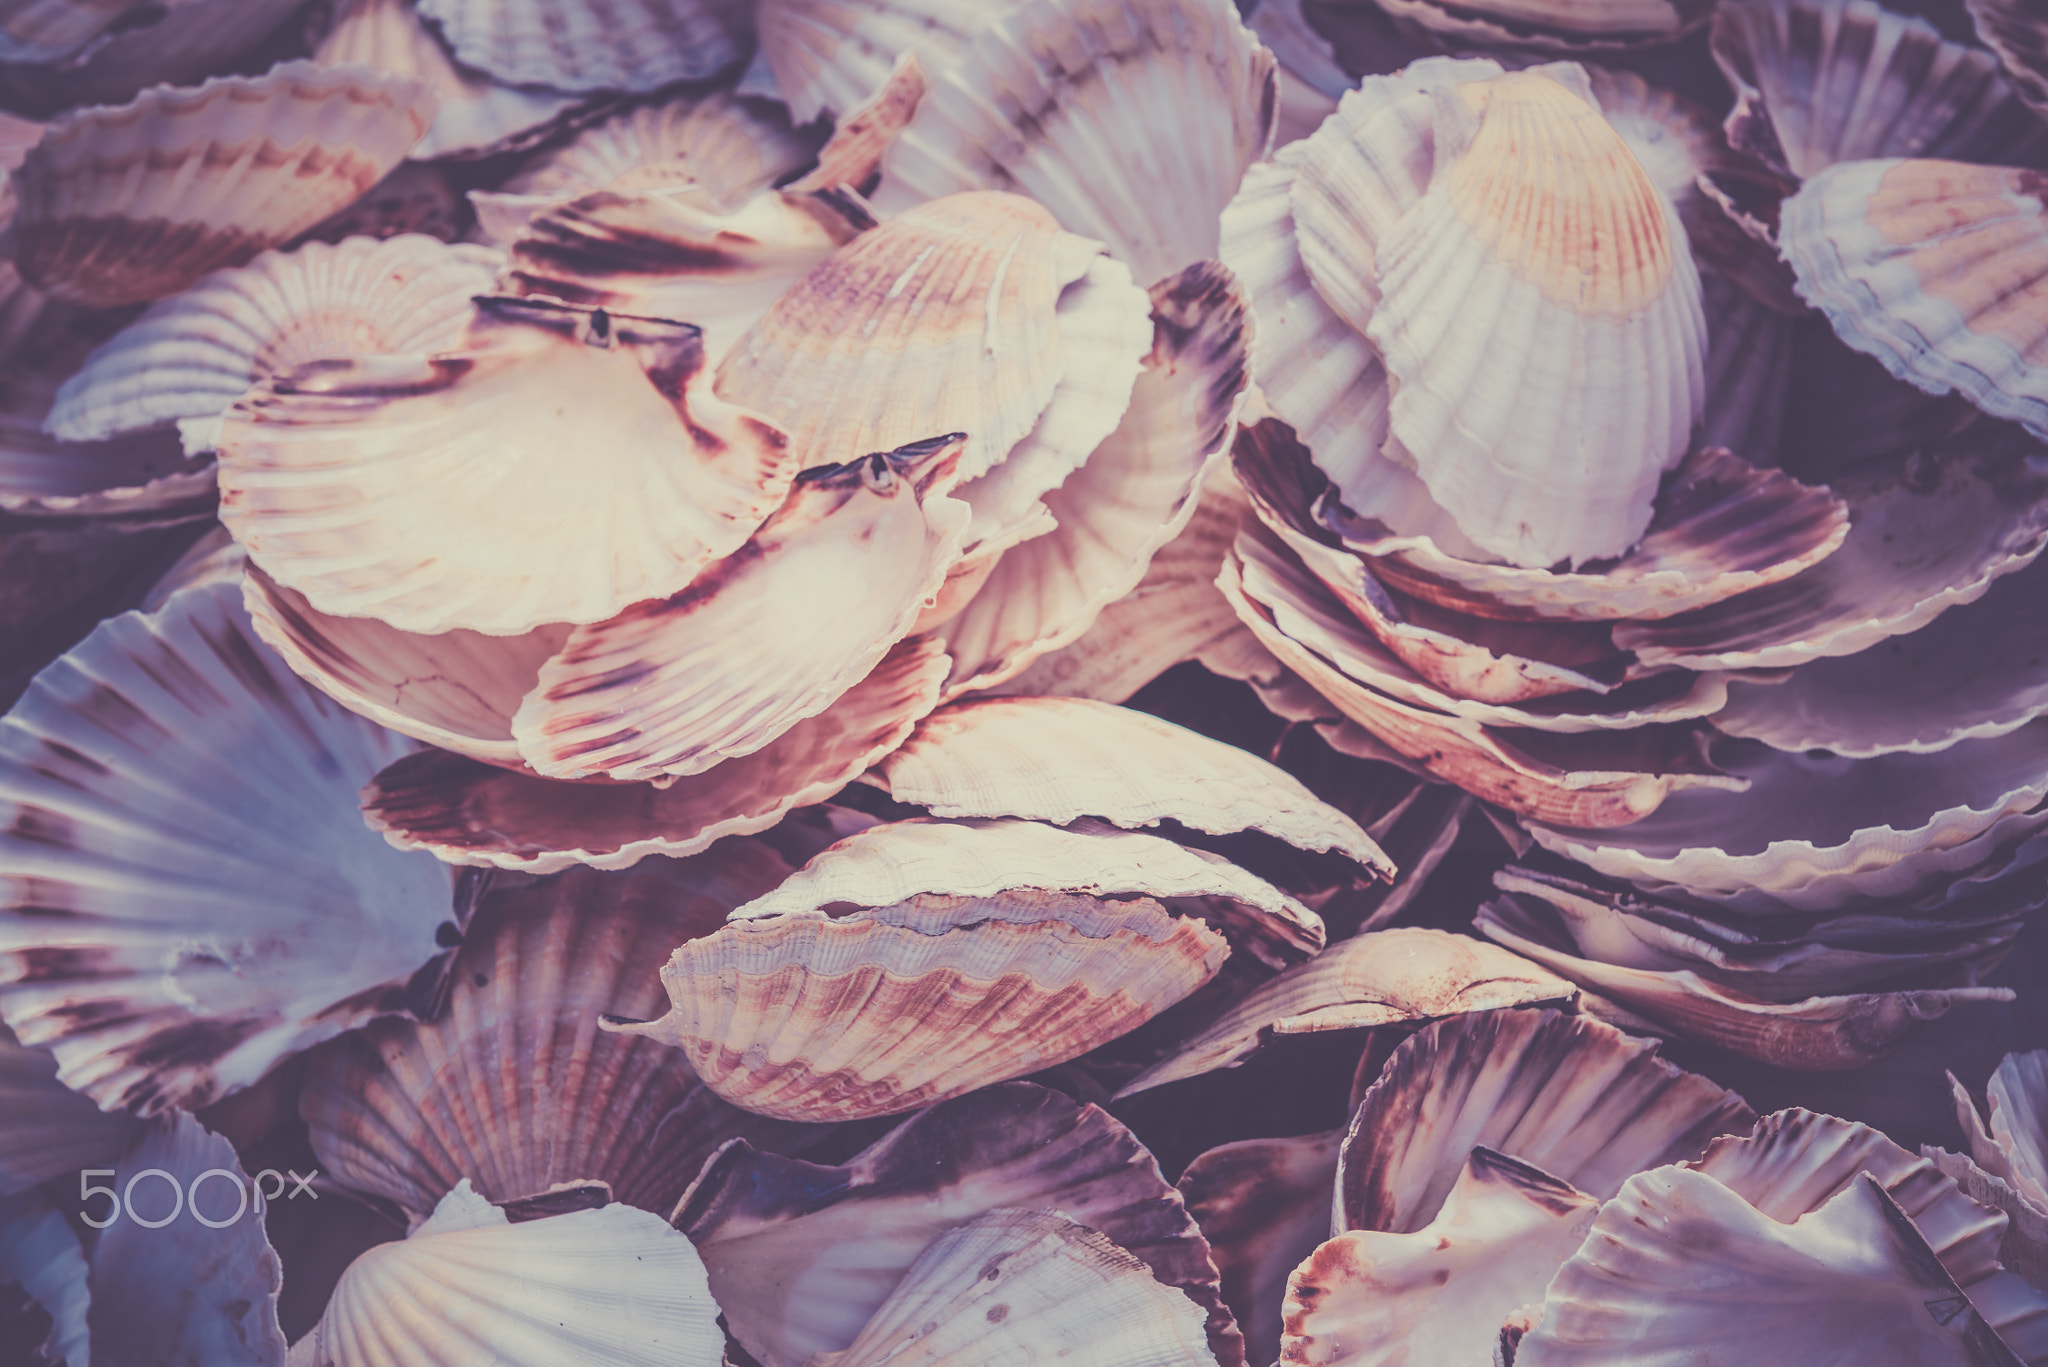 Scallop shells heap